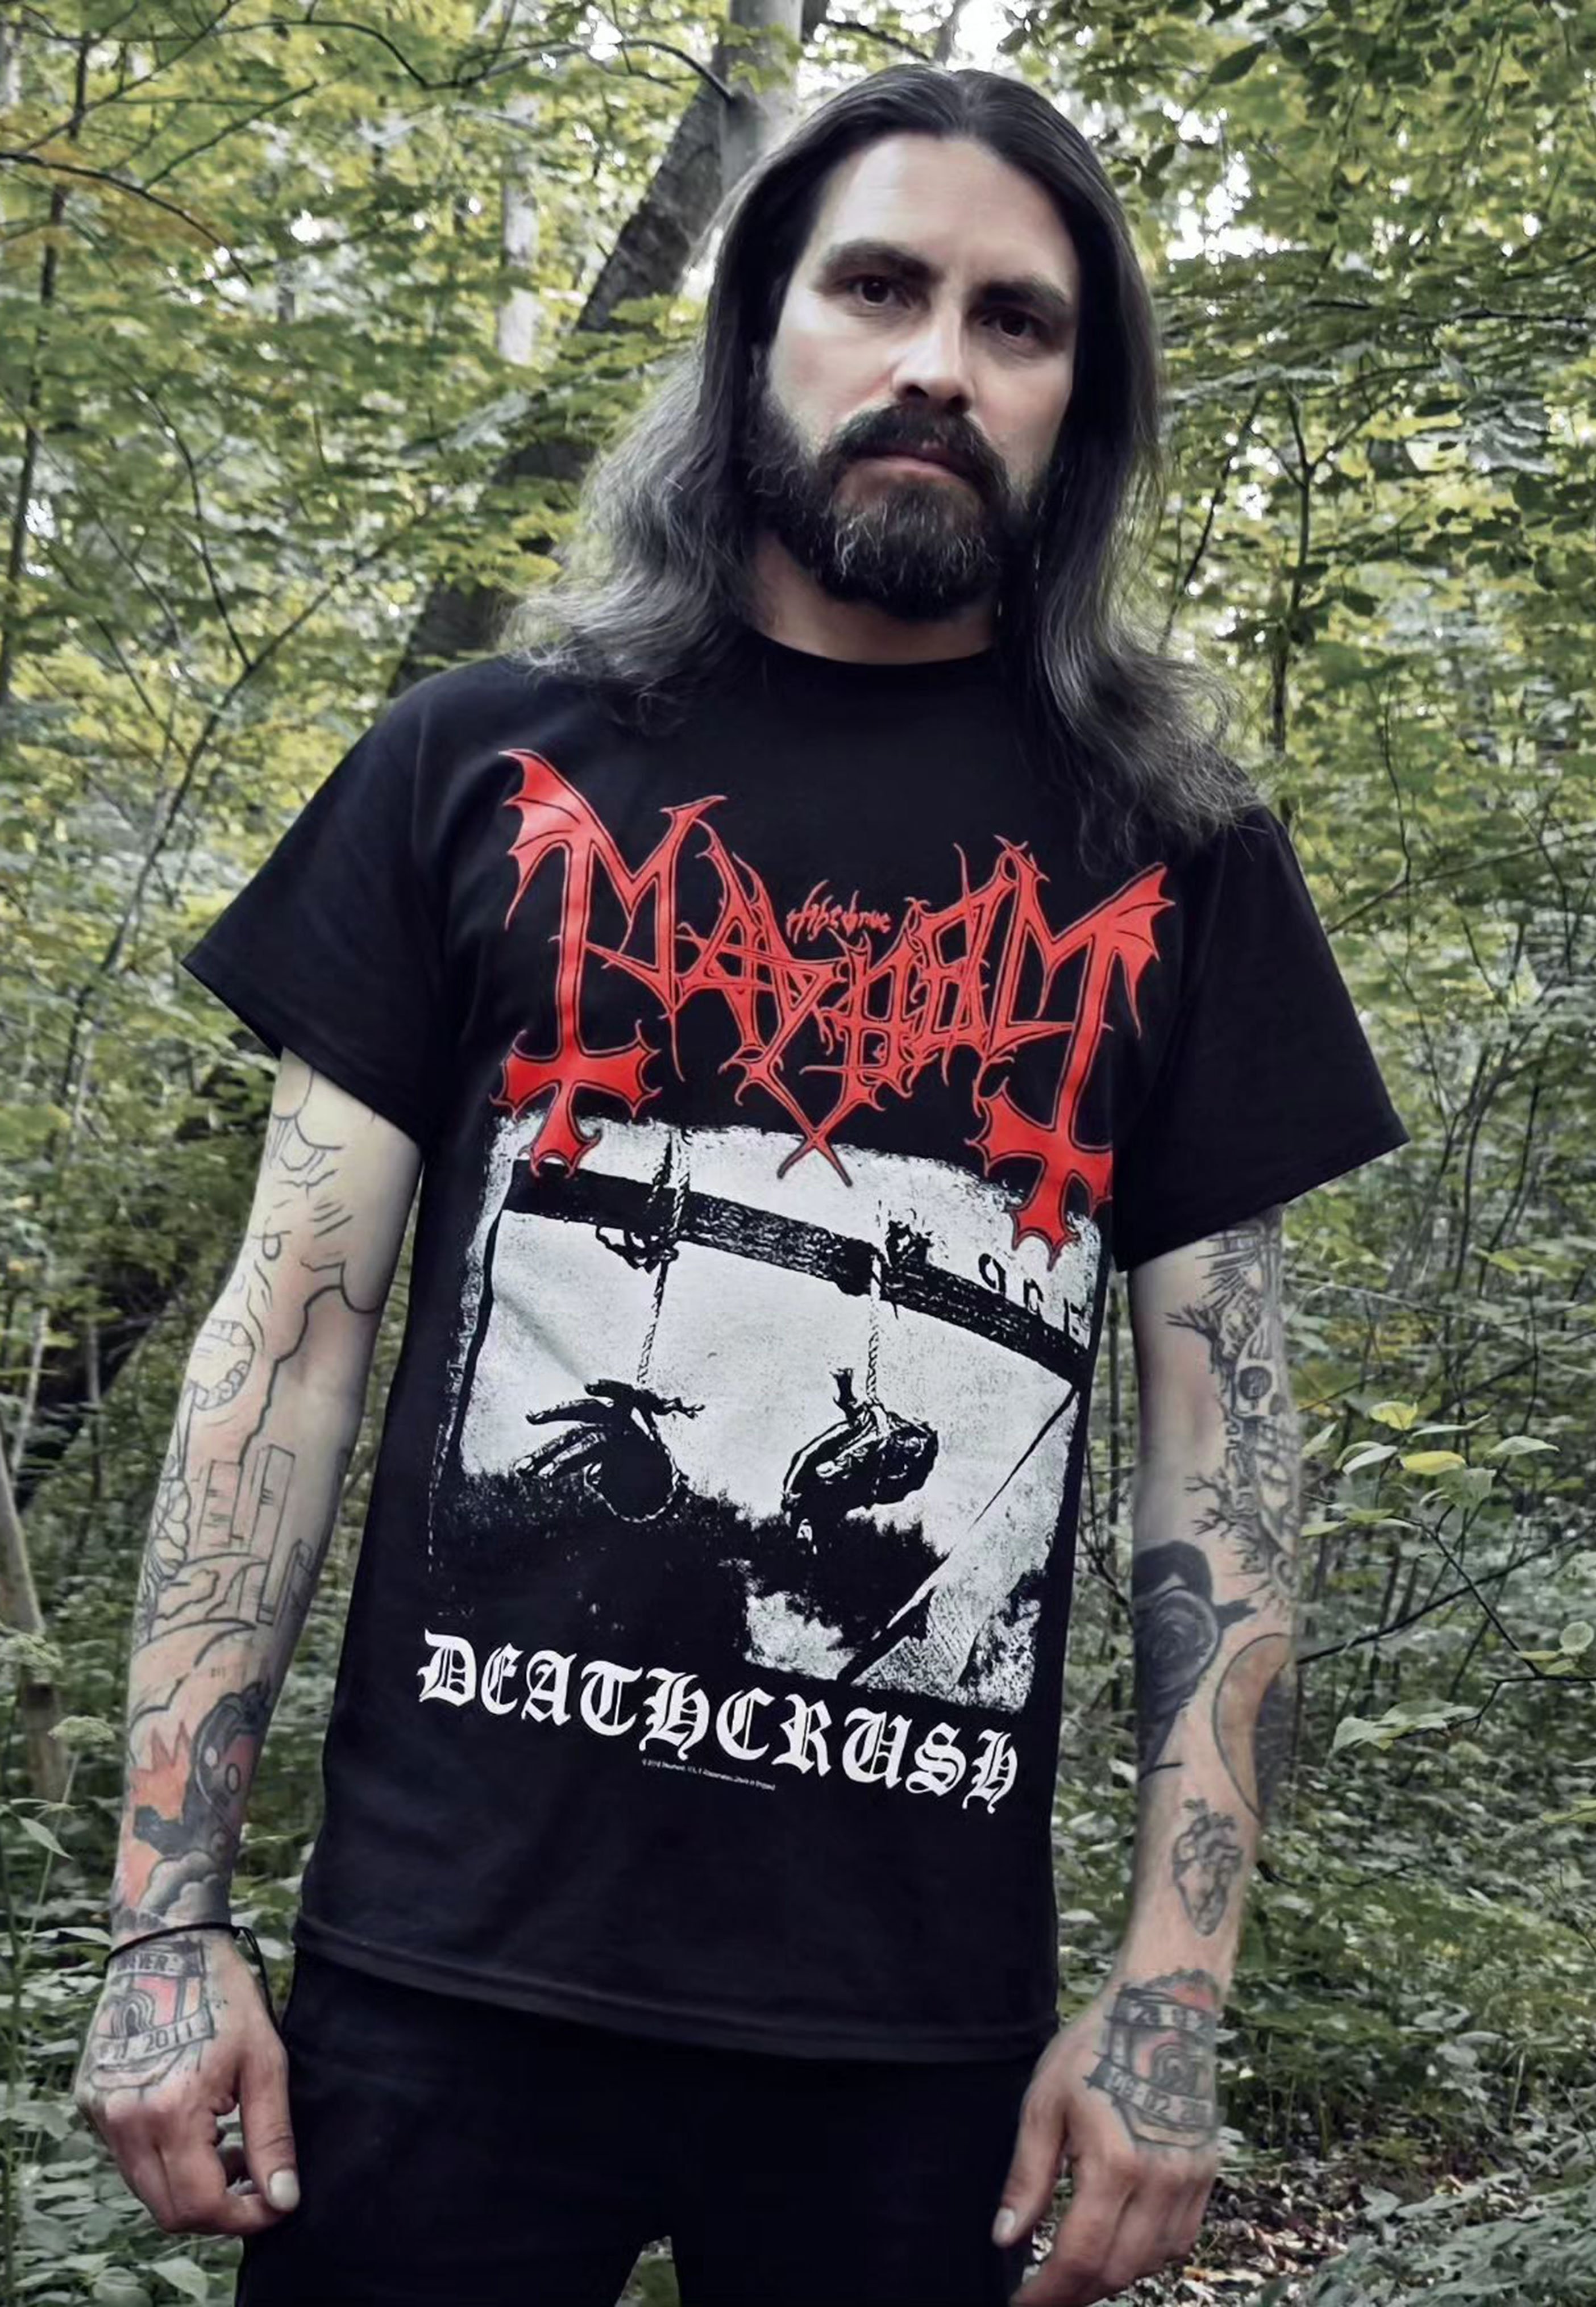 https://www.impericon.com/media/catalog/product/m/a/mayhem_bavarian_metlahead_boy_t-shirt_merch.jpg